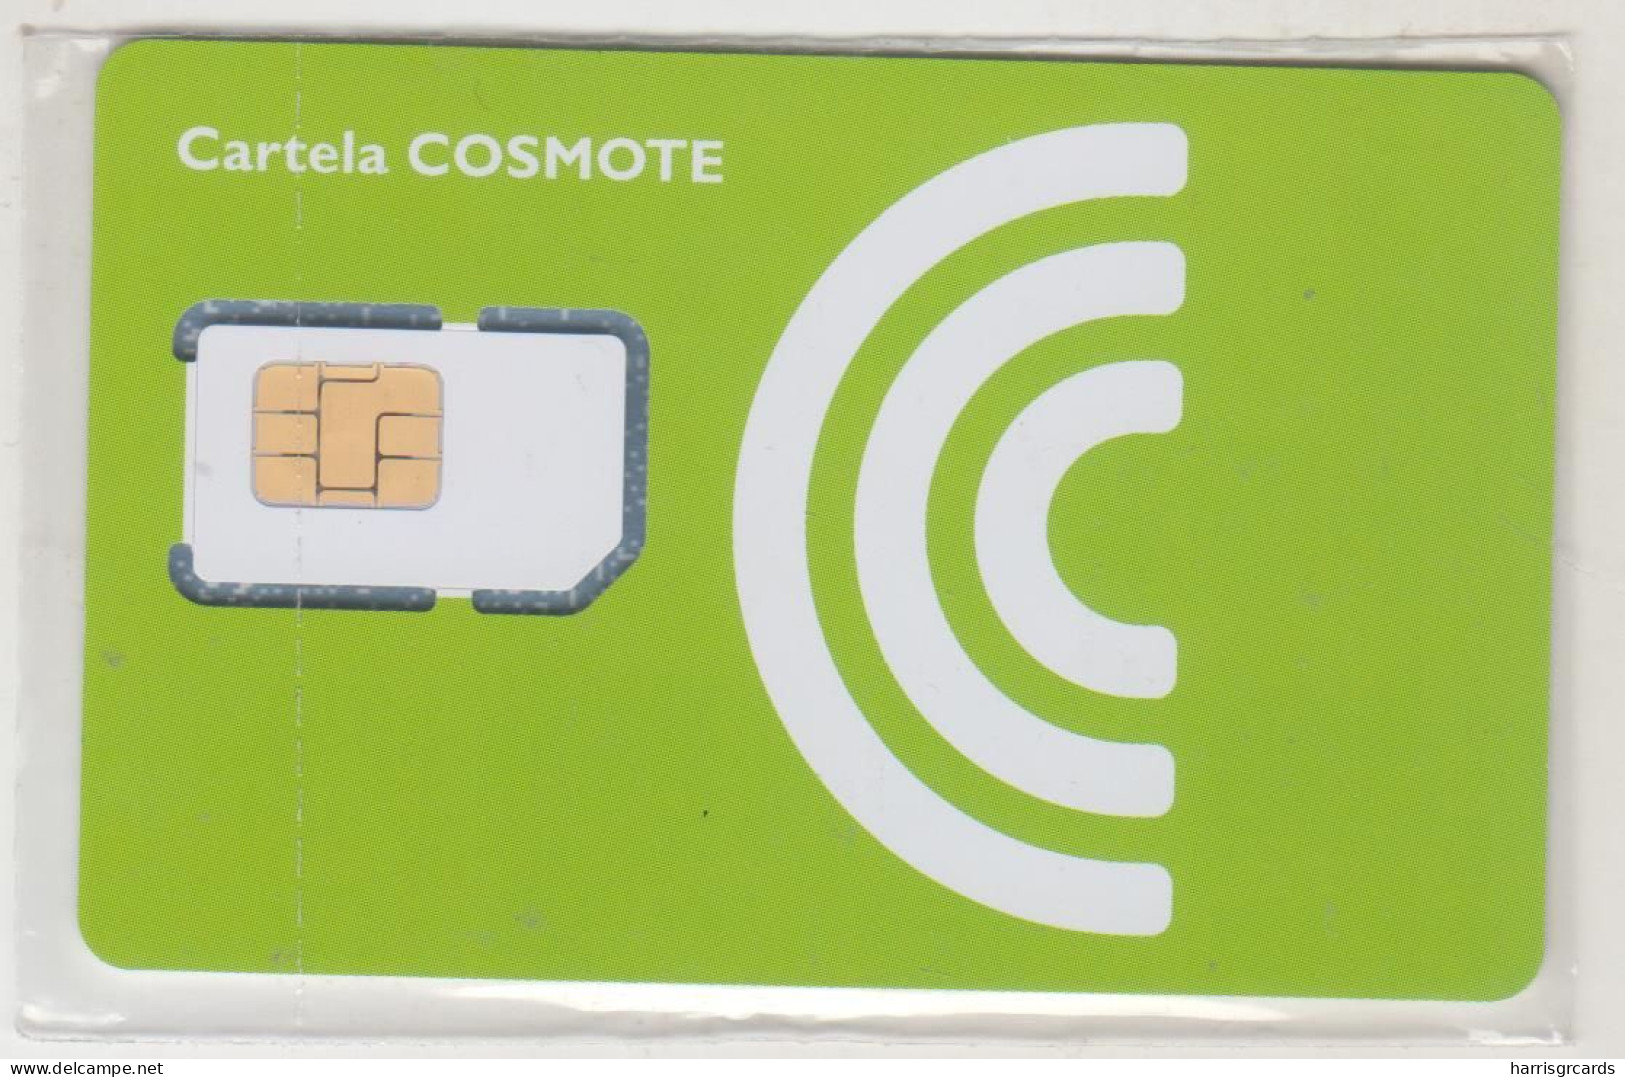 ROMANIA - Cosmote 4th Edition, Cosmote GSM Card, Mint In Blister - Rumänien